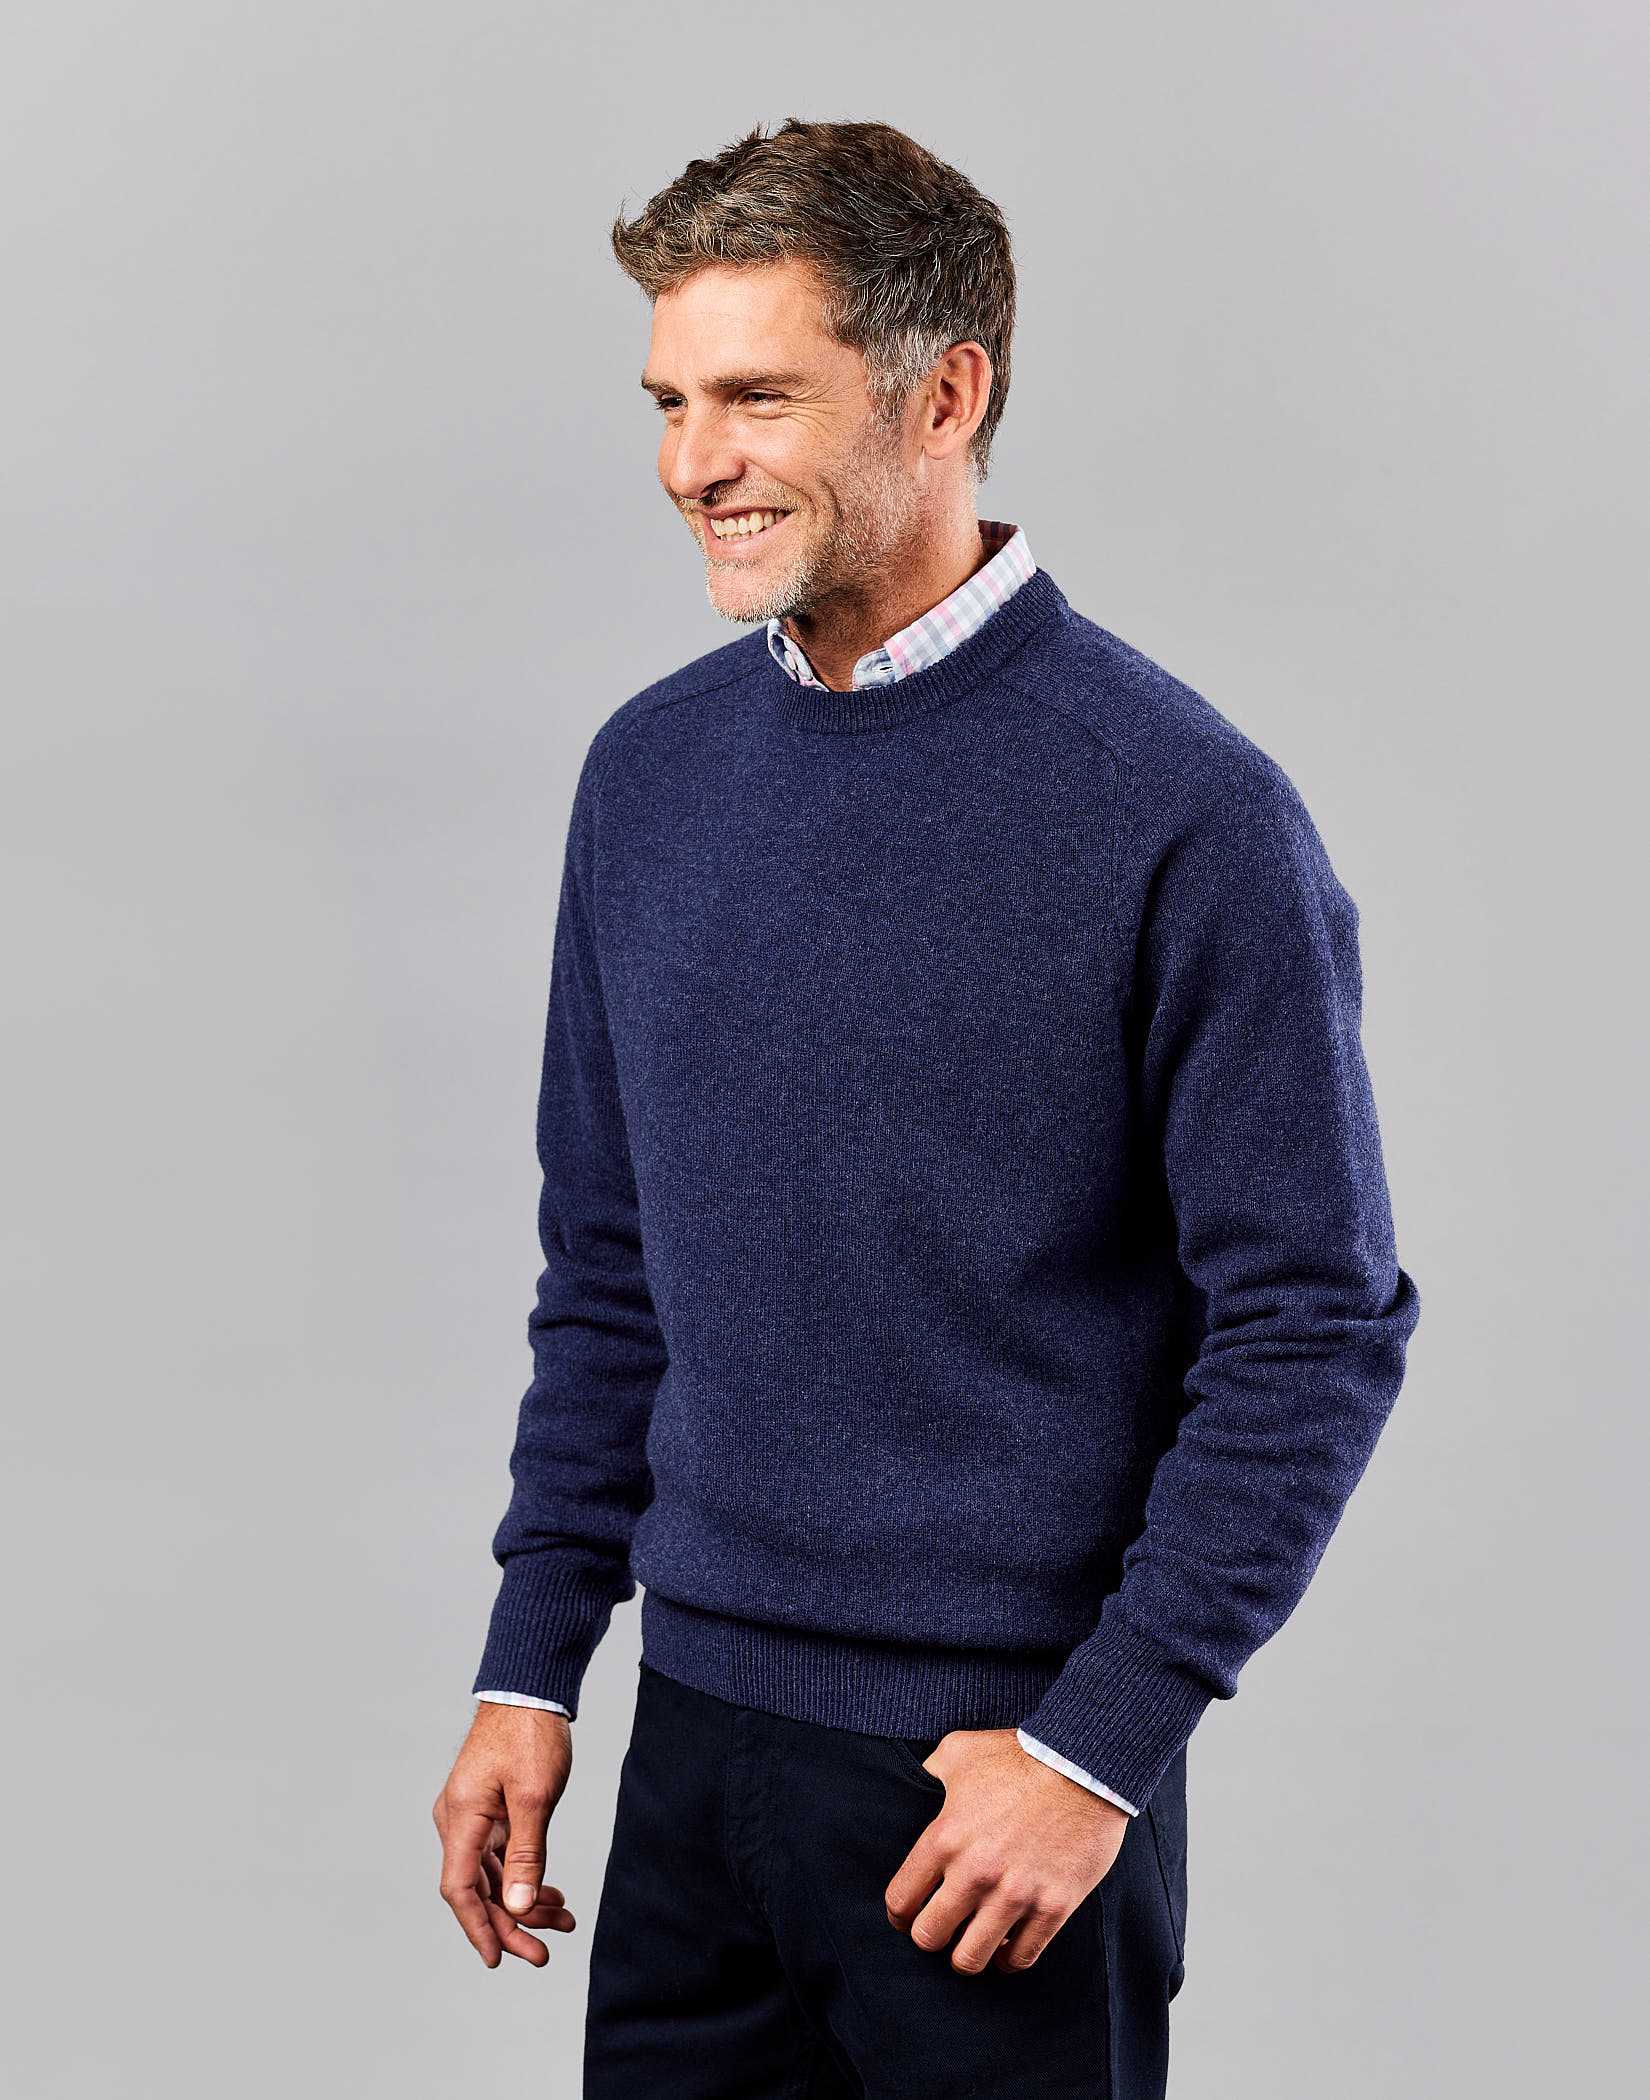 Men's Knitwear: Merino Wool, Cotton, Lambswool & More | Joseph Turner